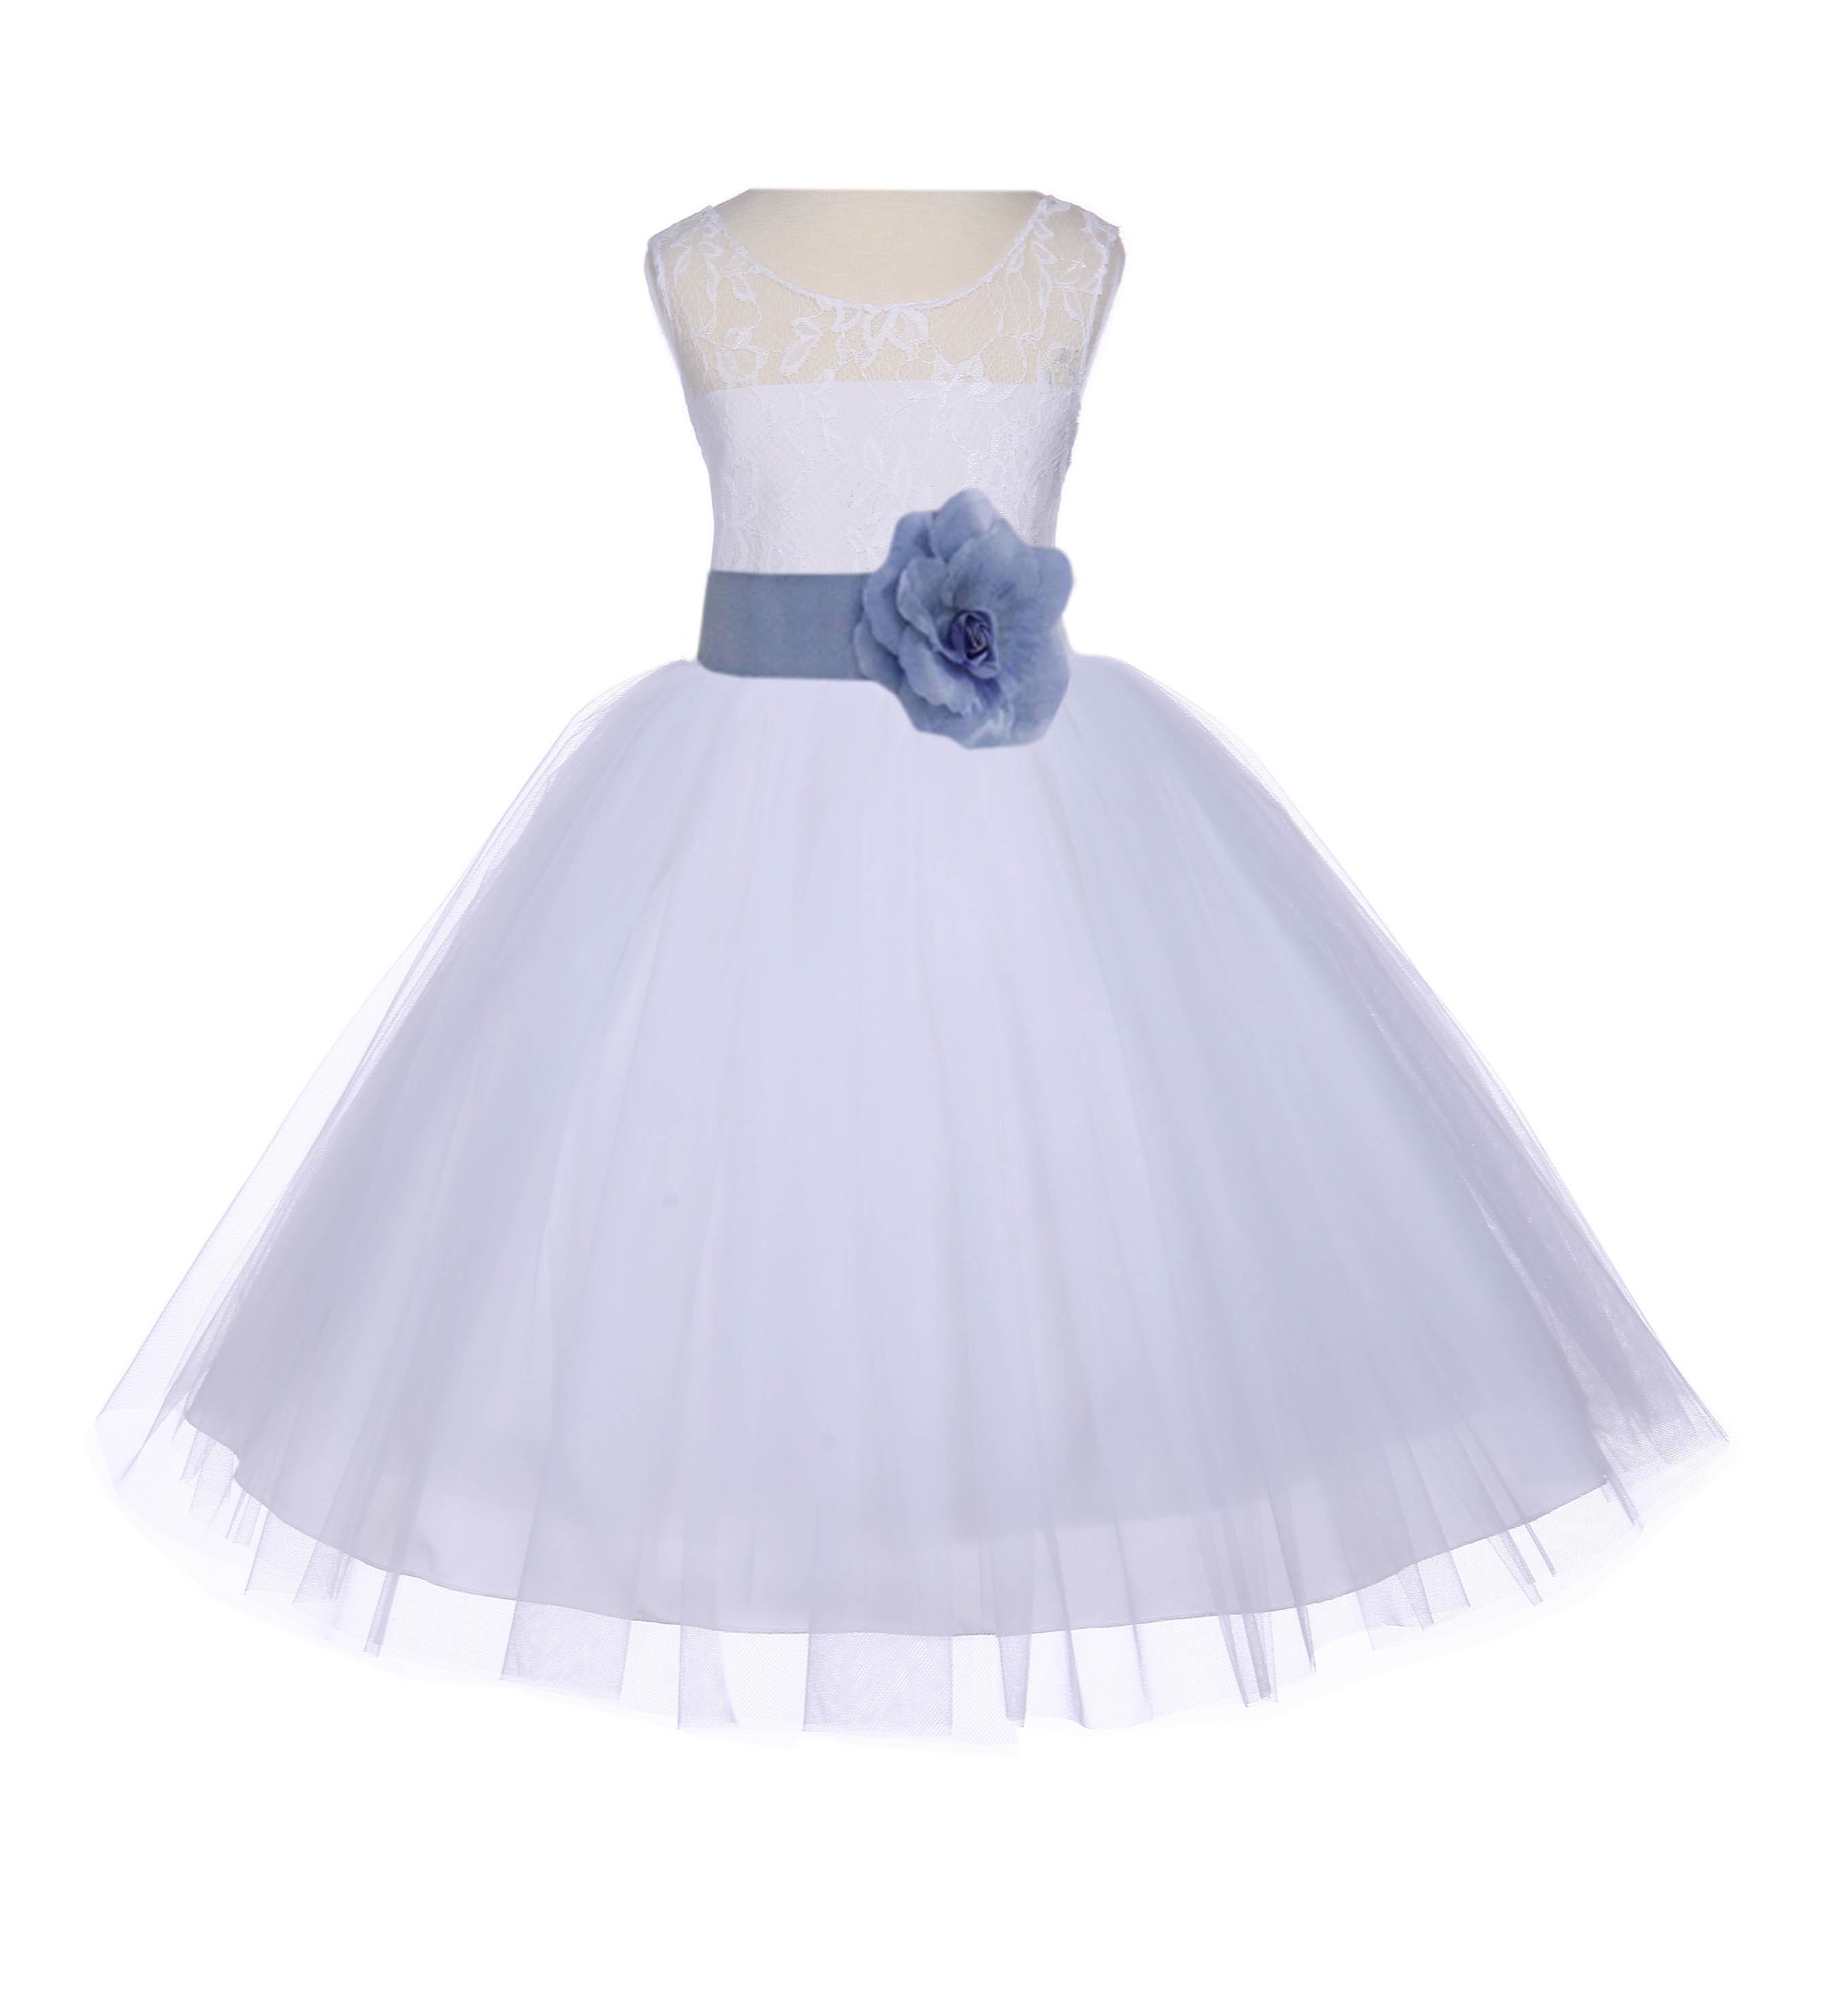 White/Bluebird Floral Lace Bodice Tulle Flower Girl Dress Wedding 153S